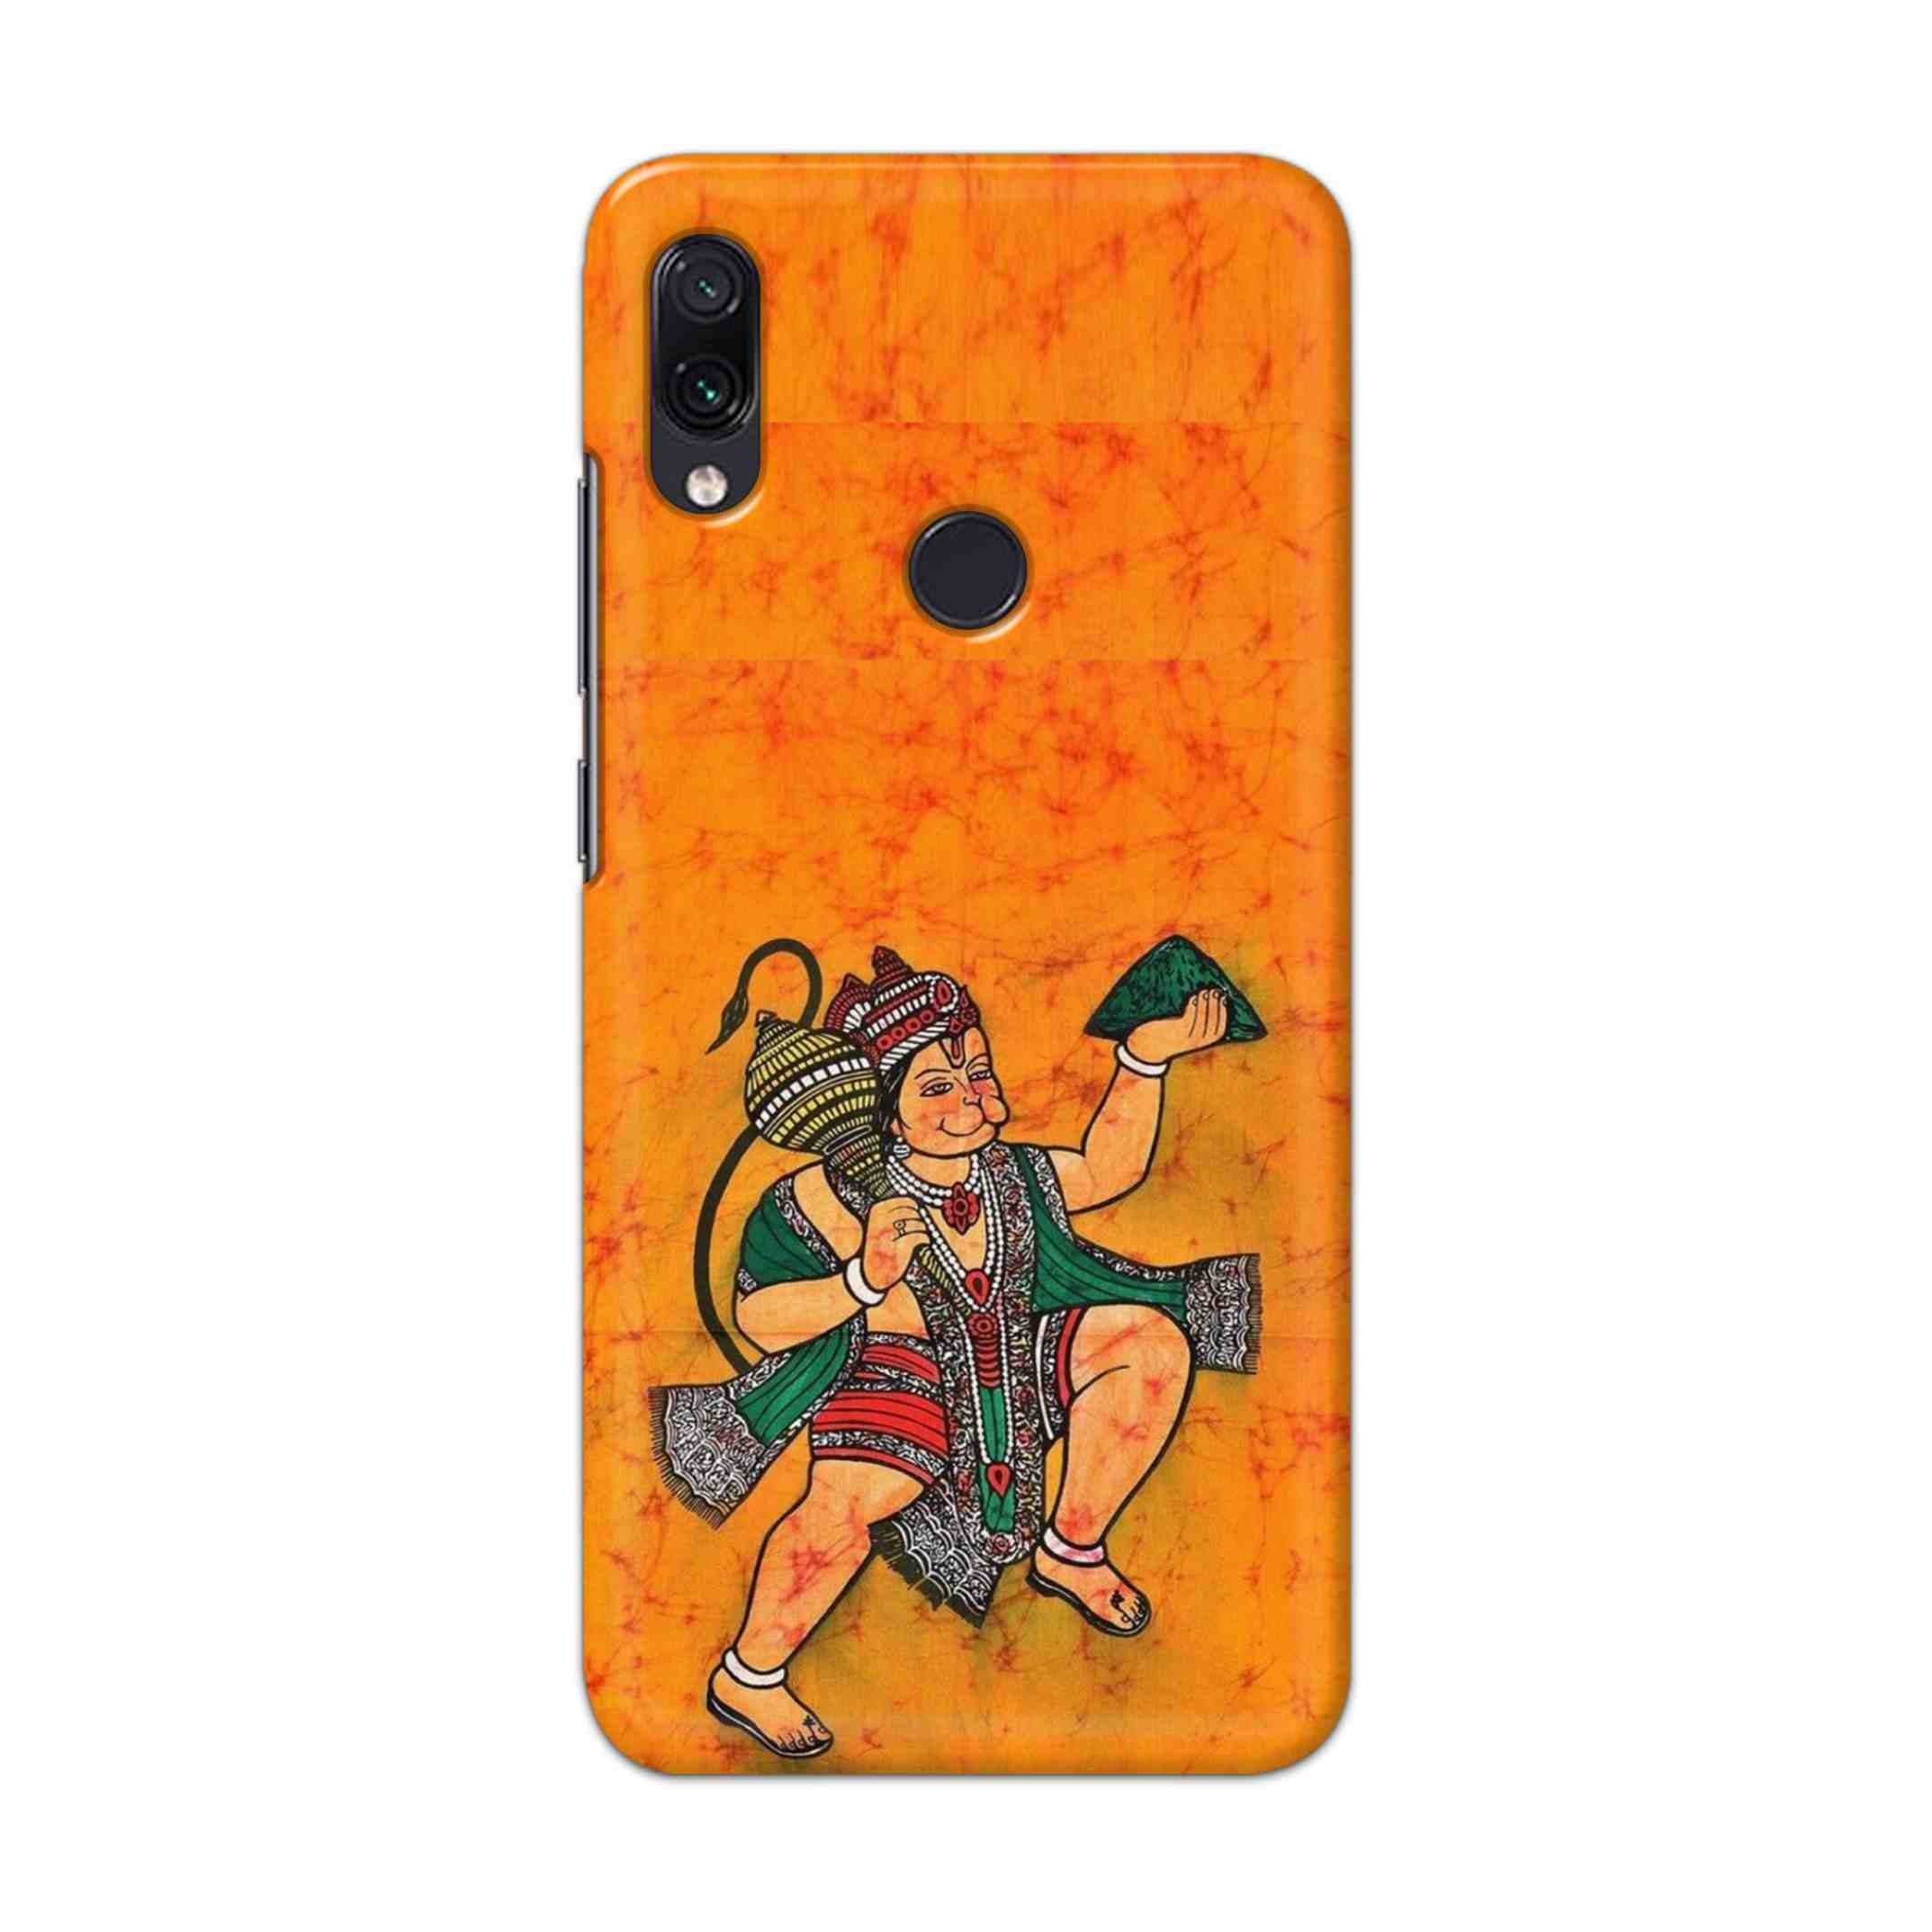 Buy Hanuman Ji Hard Back Mobile Phone Case Cover For Xiaomi Redmi 7 Online